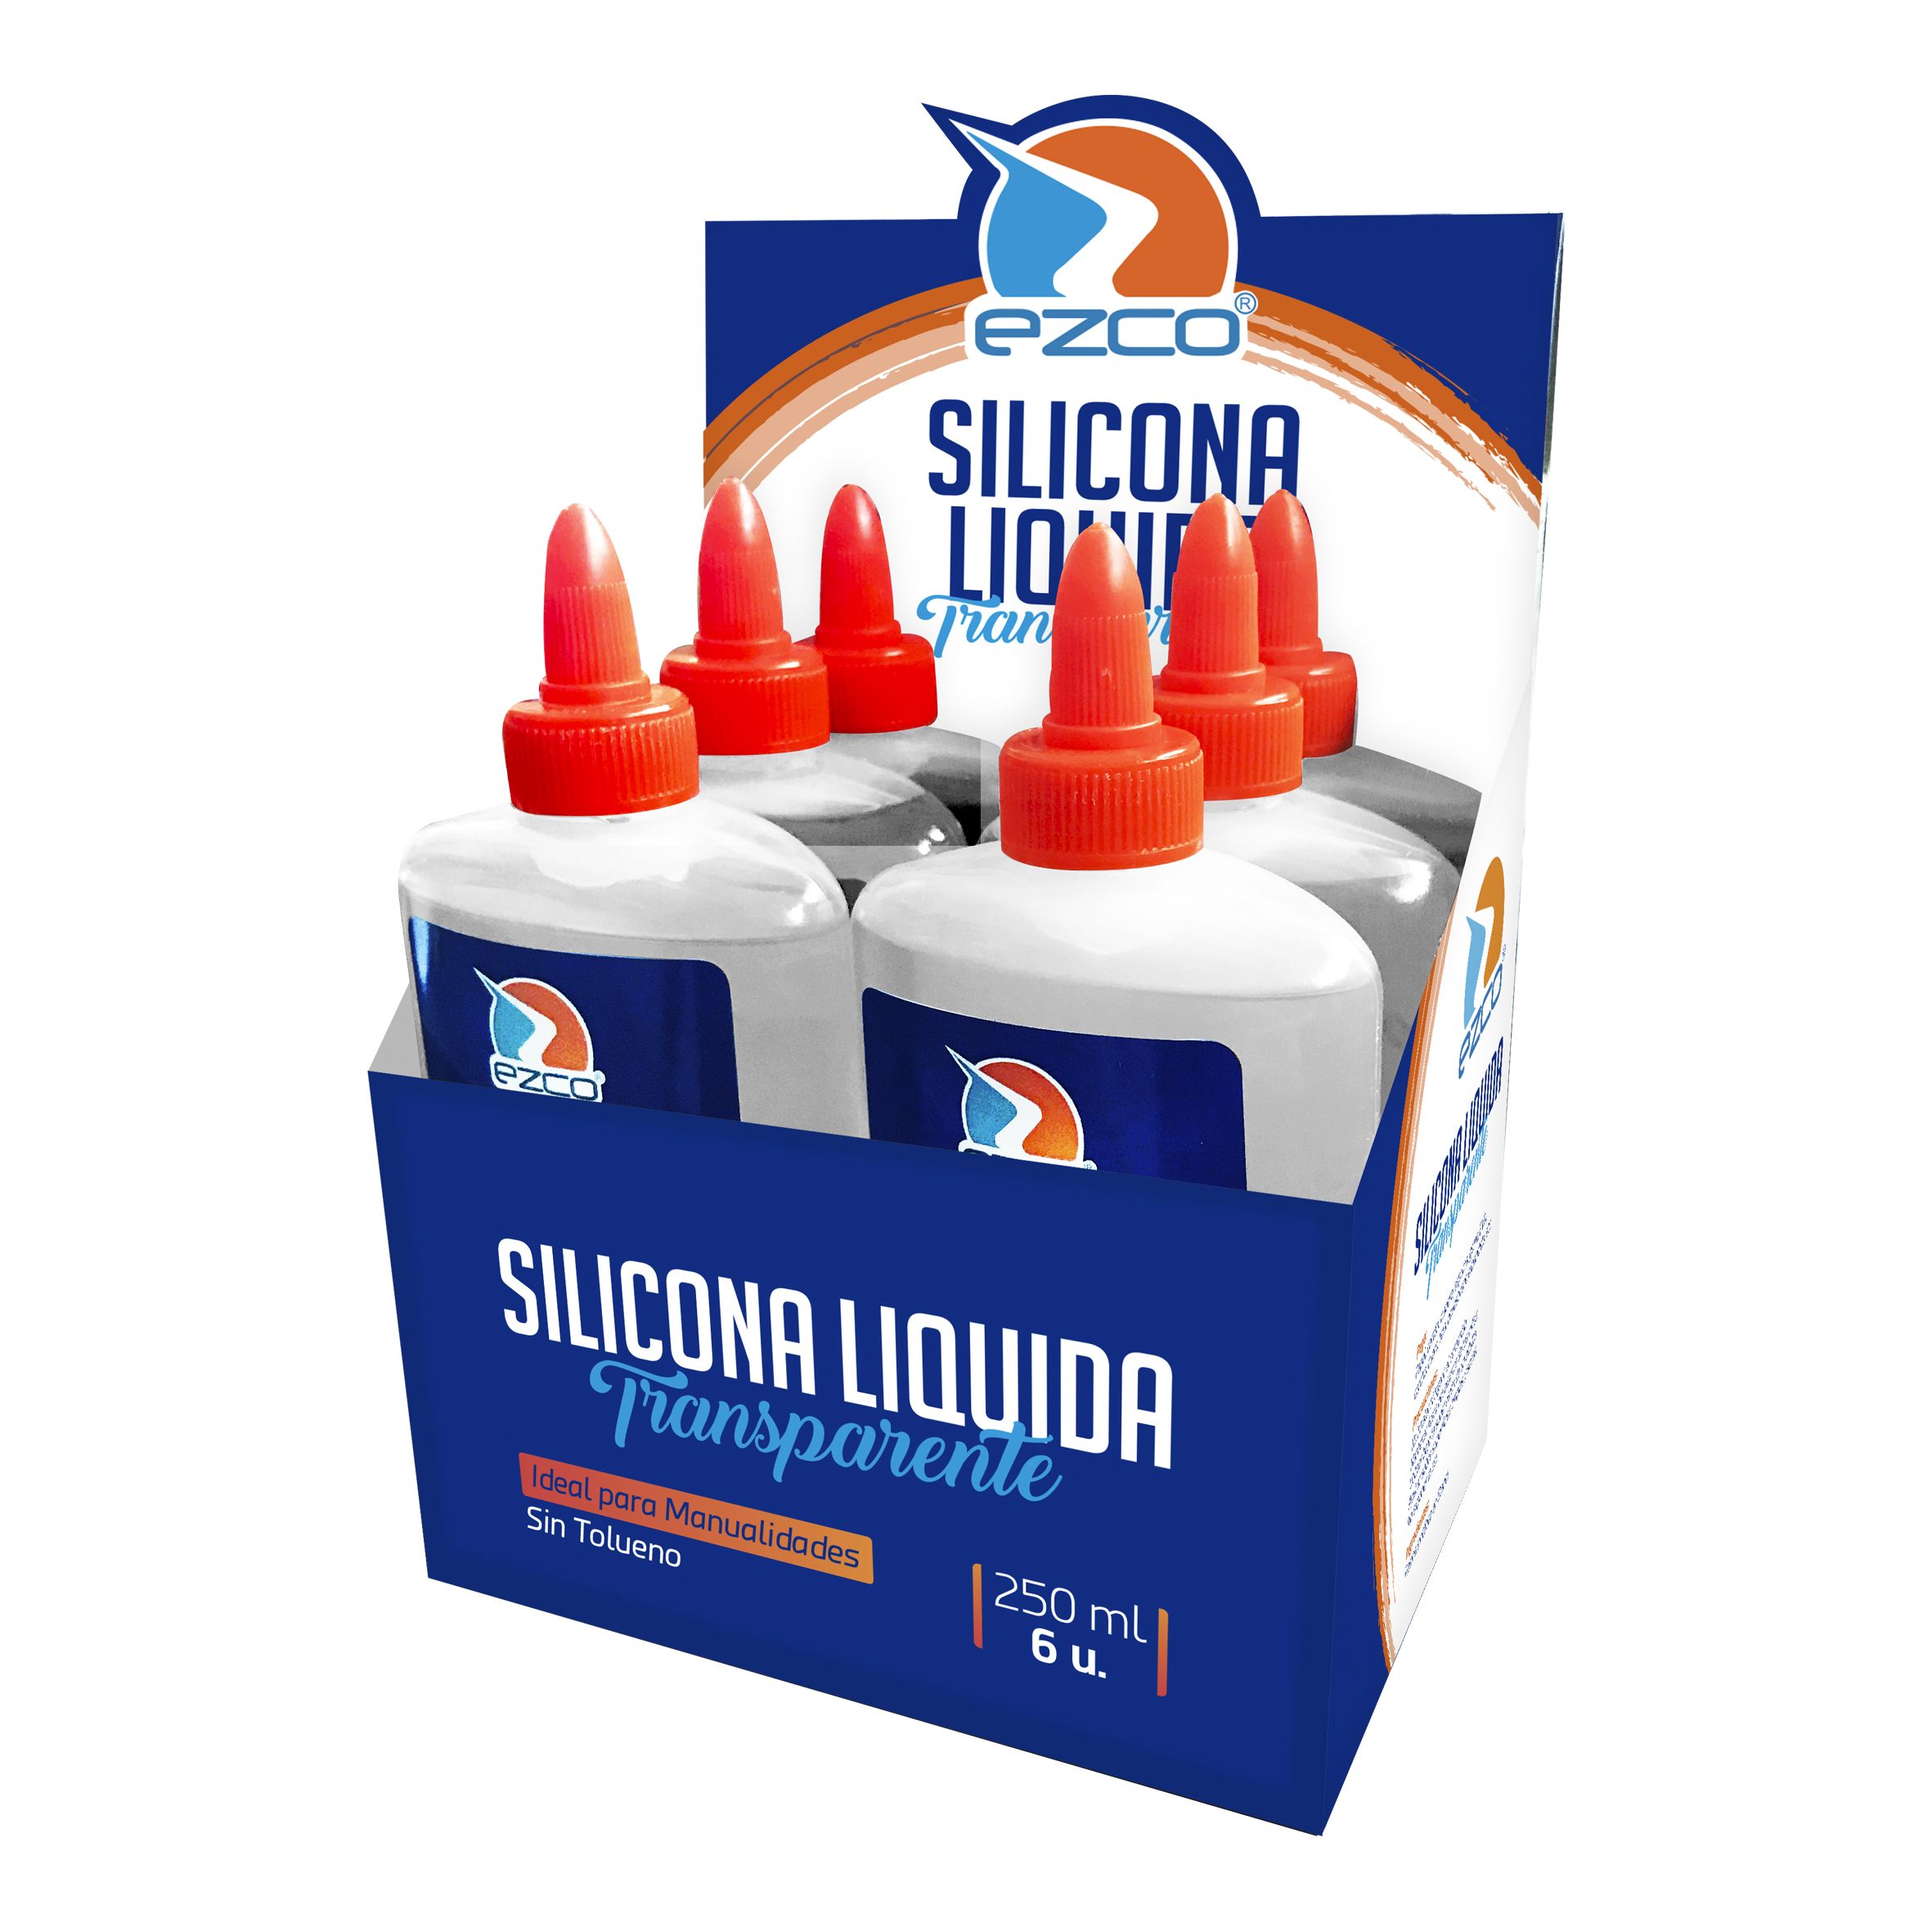 24 Silicona Liquida Transparente 30ml Ezco Pegamento Escolar